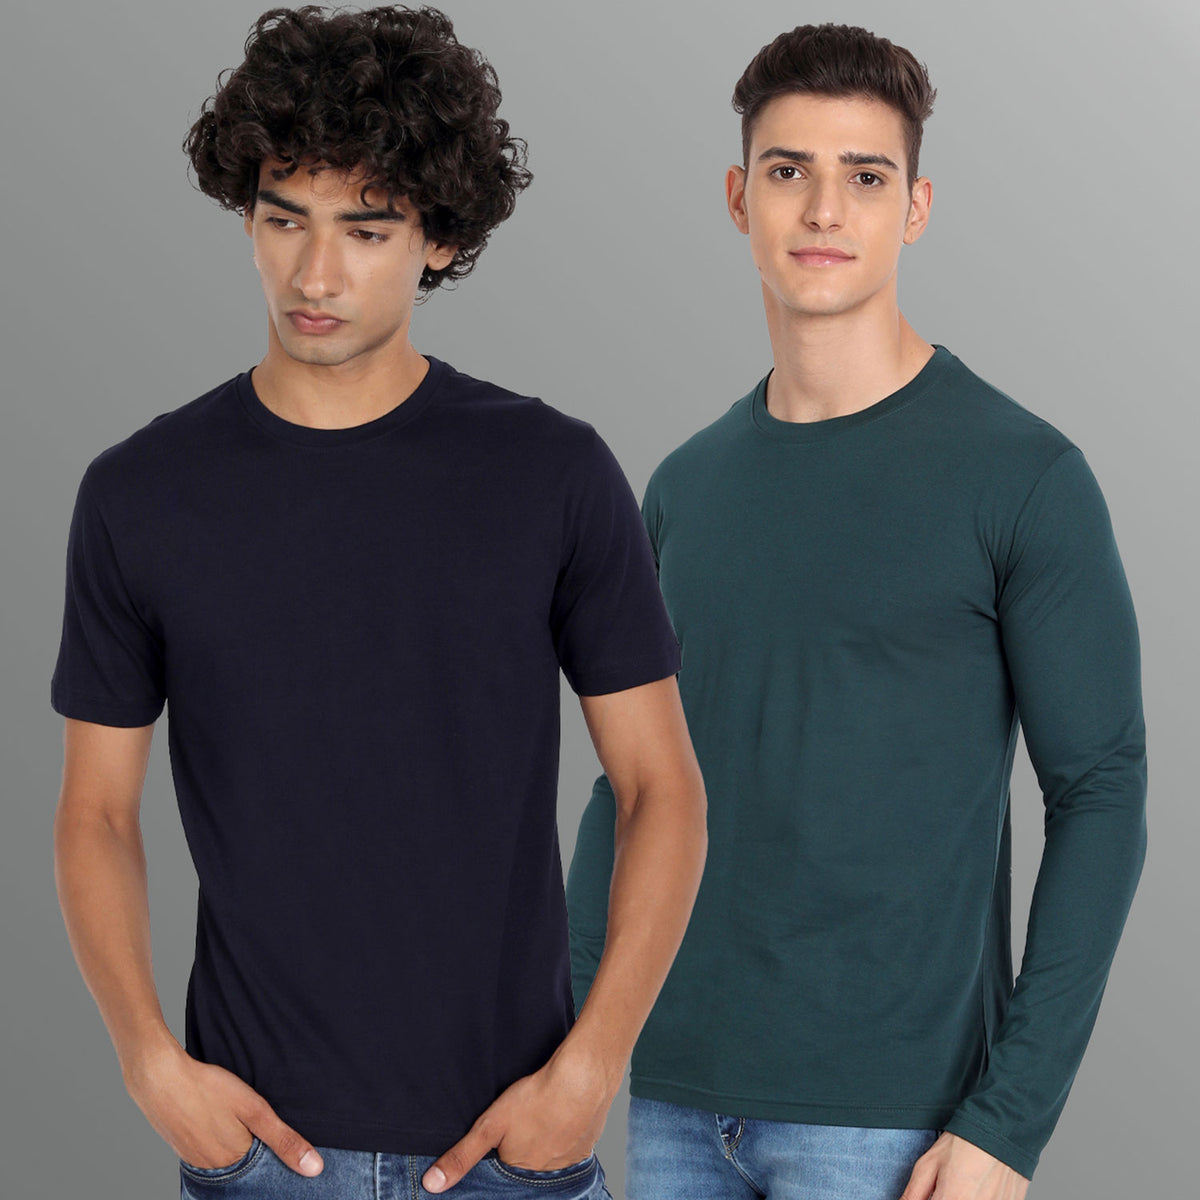 Half Sleeve Blue and Full Sleeve Green T-shirt Combo For Men